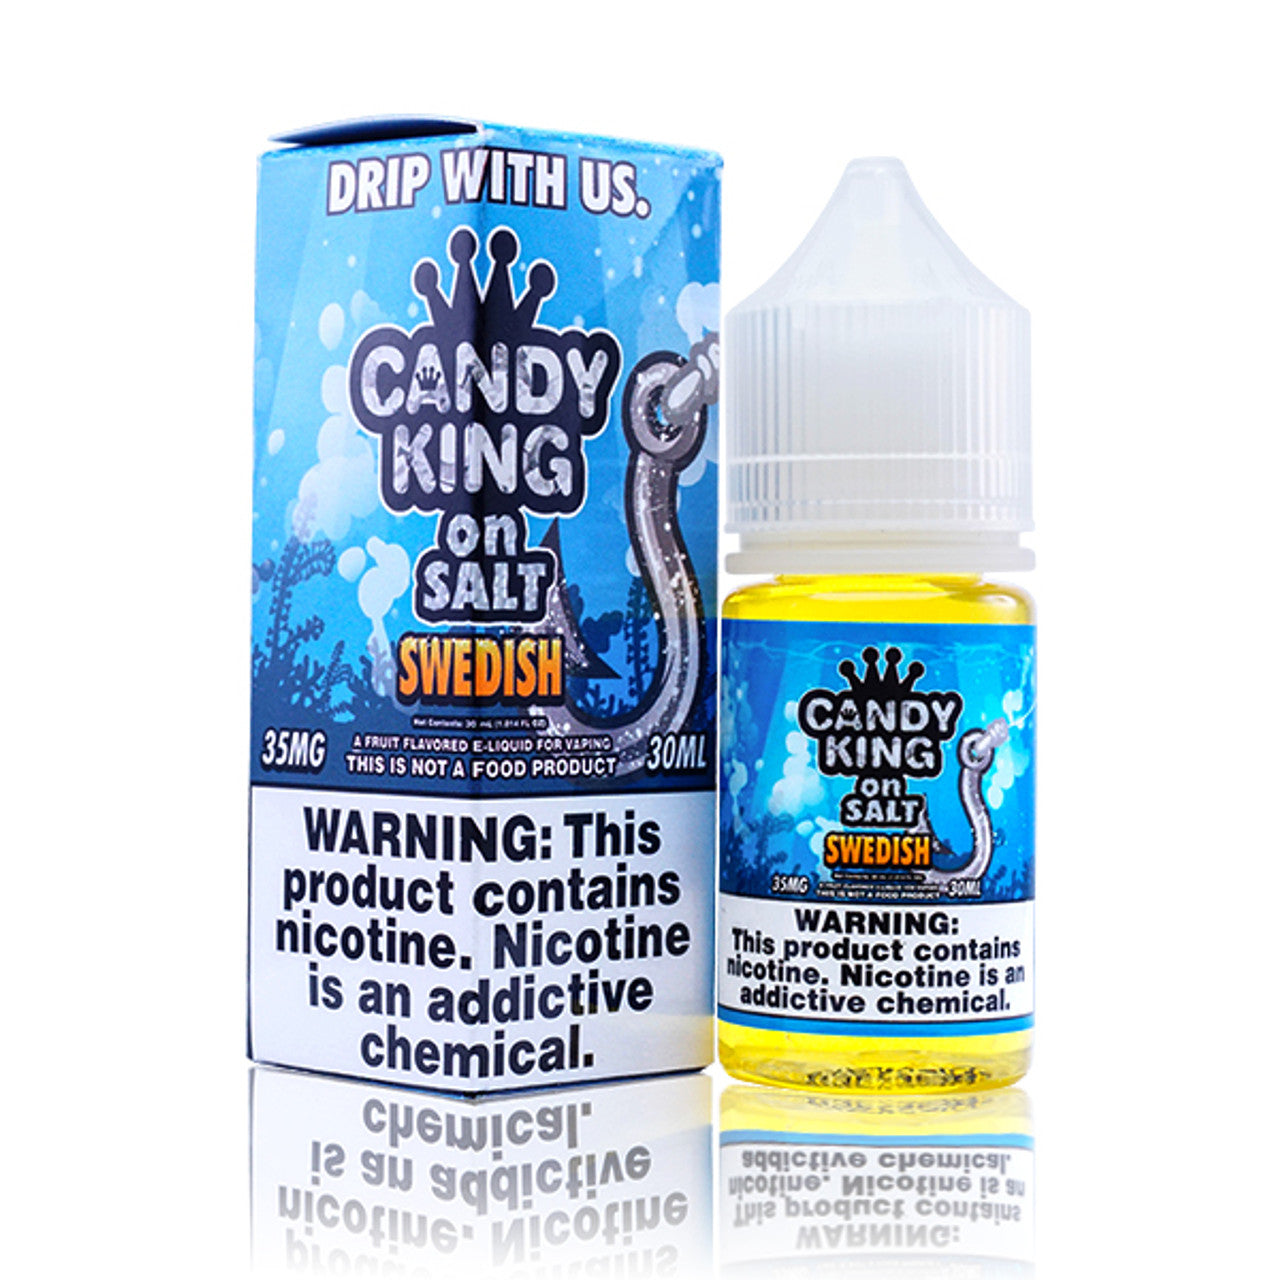 Candy King on Salt - Salt Nic E-Liquid (30mL) - MK Distro